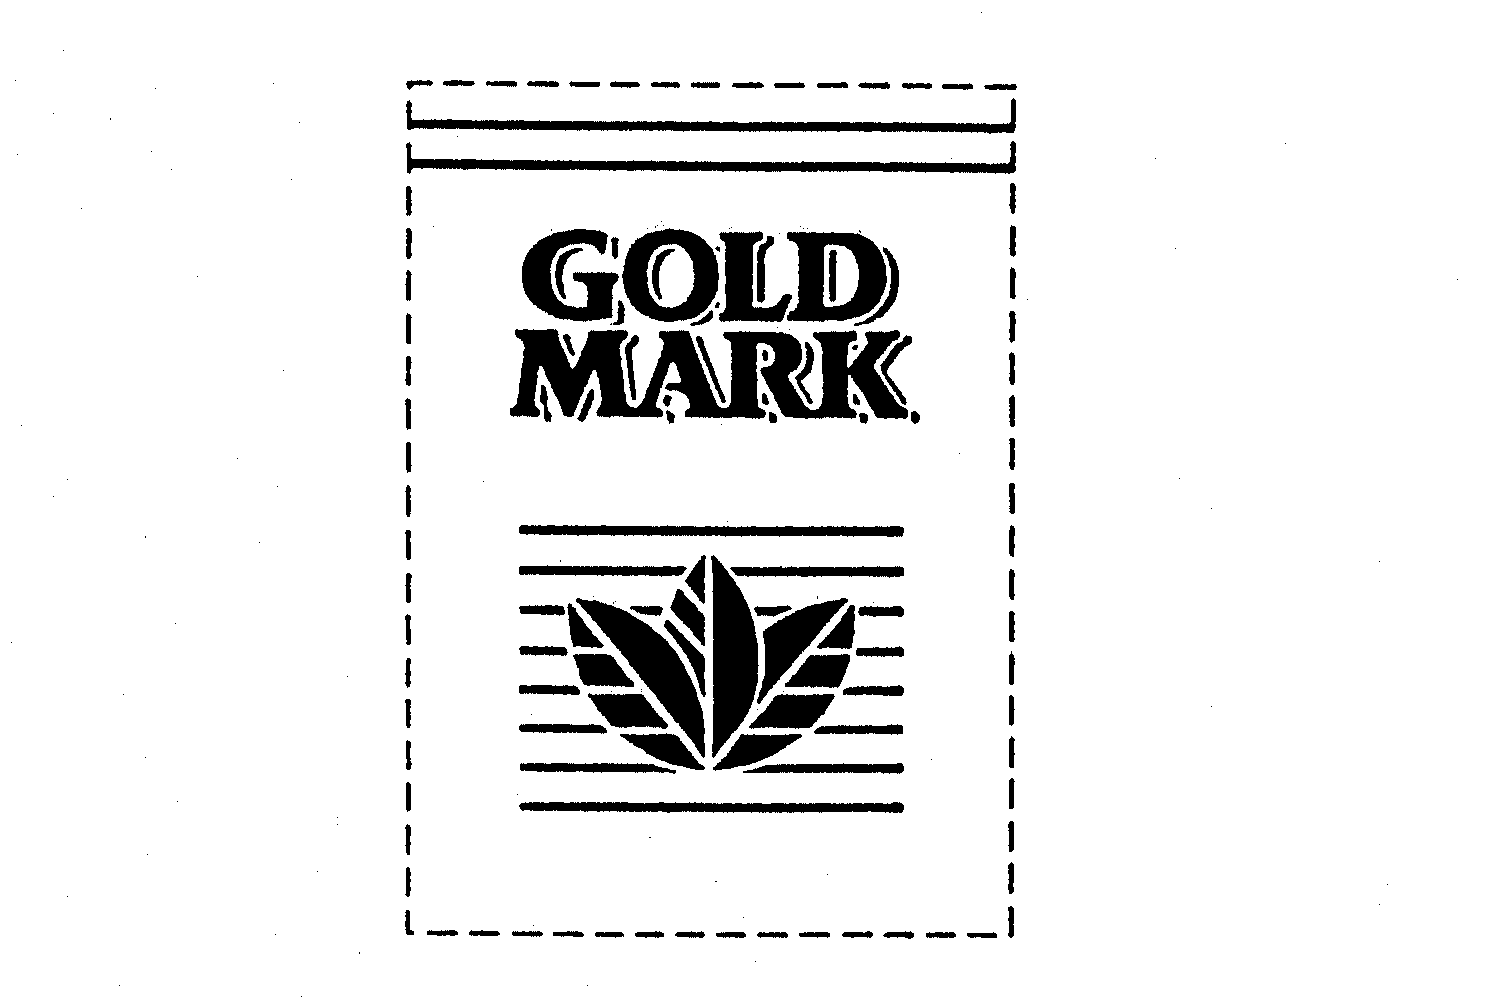  GOLD MARK